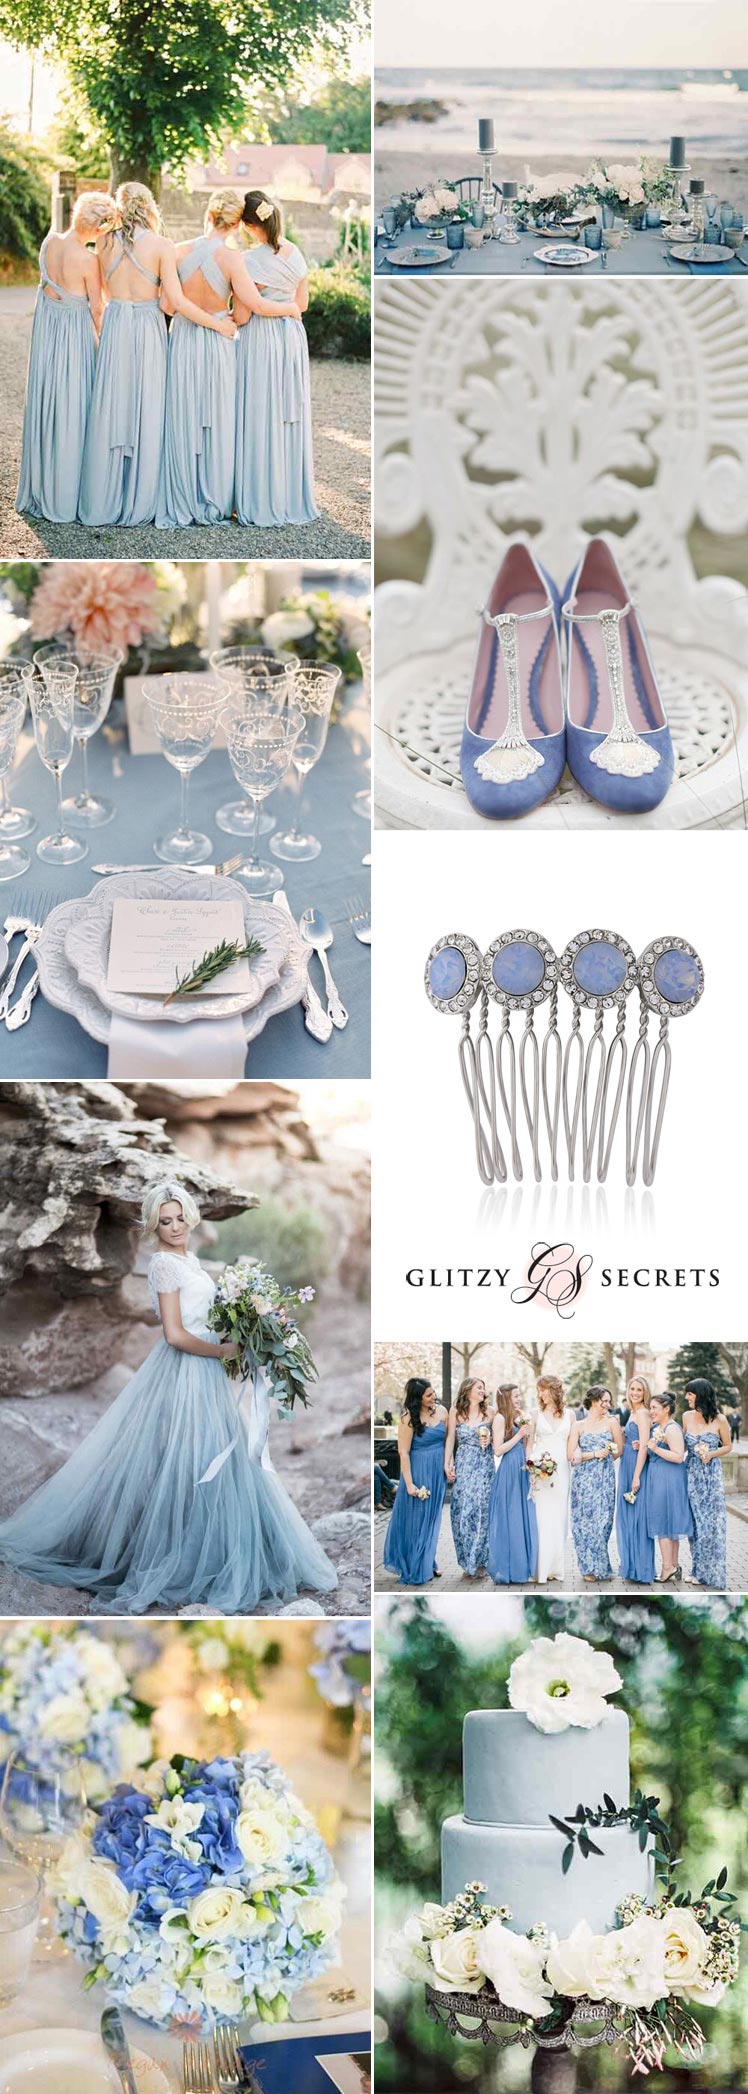 Inspiration for a wedgwood blue wedding theme